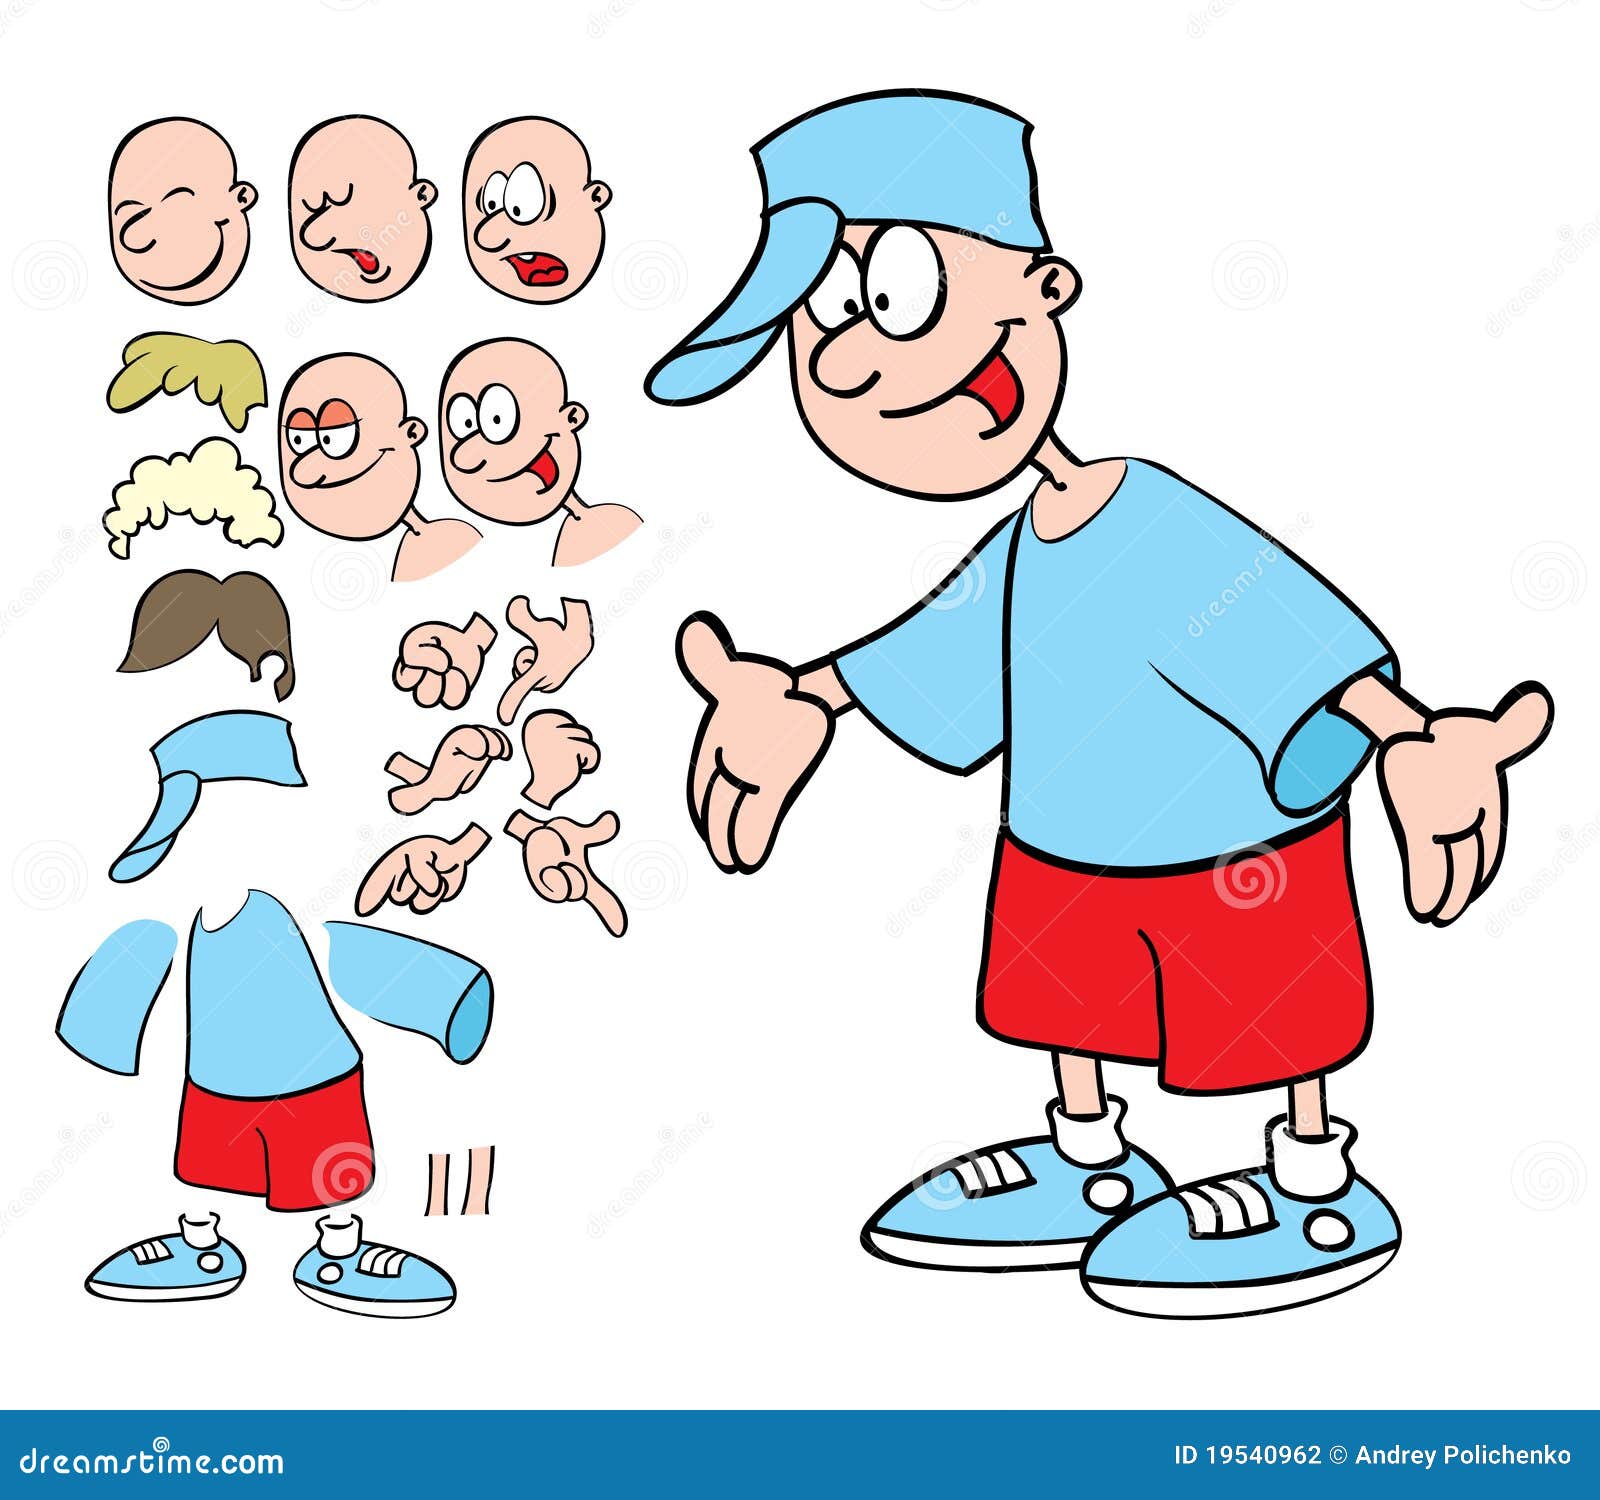 Cartoon characters stock vector. Illustration of cheerful - 19540962